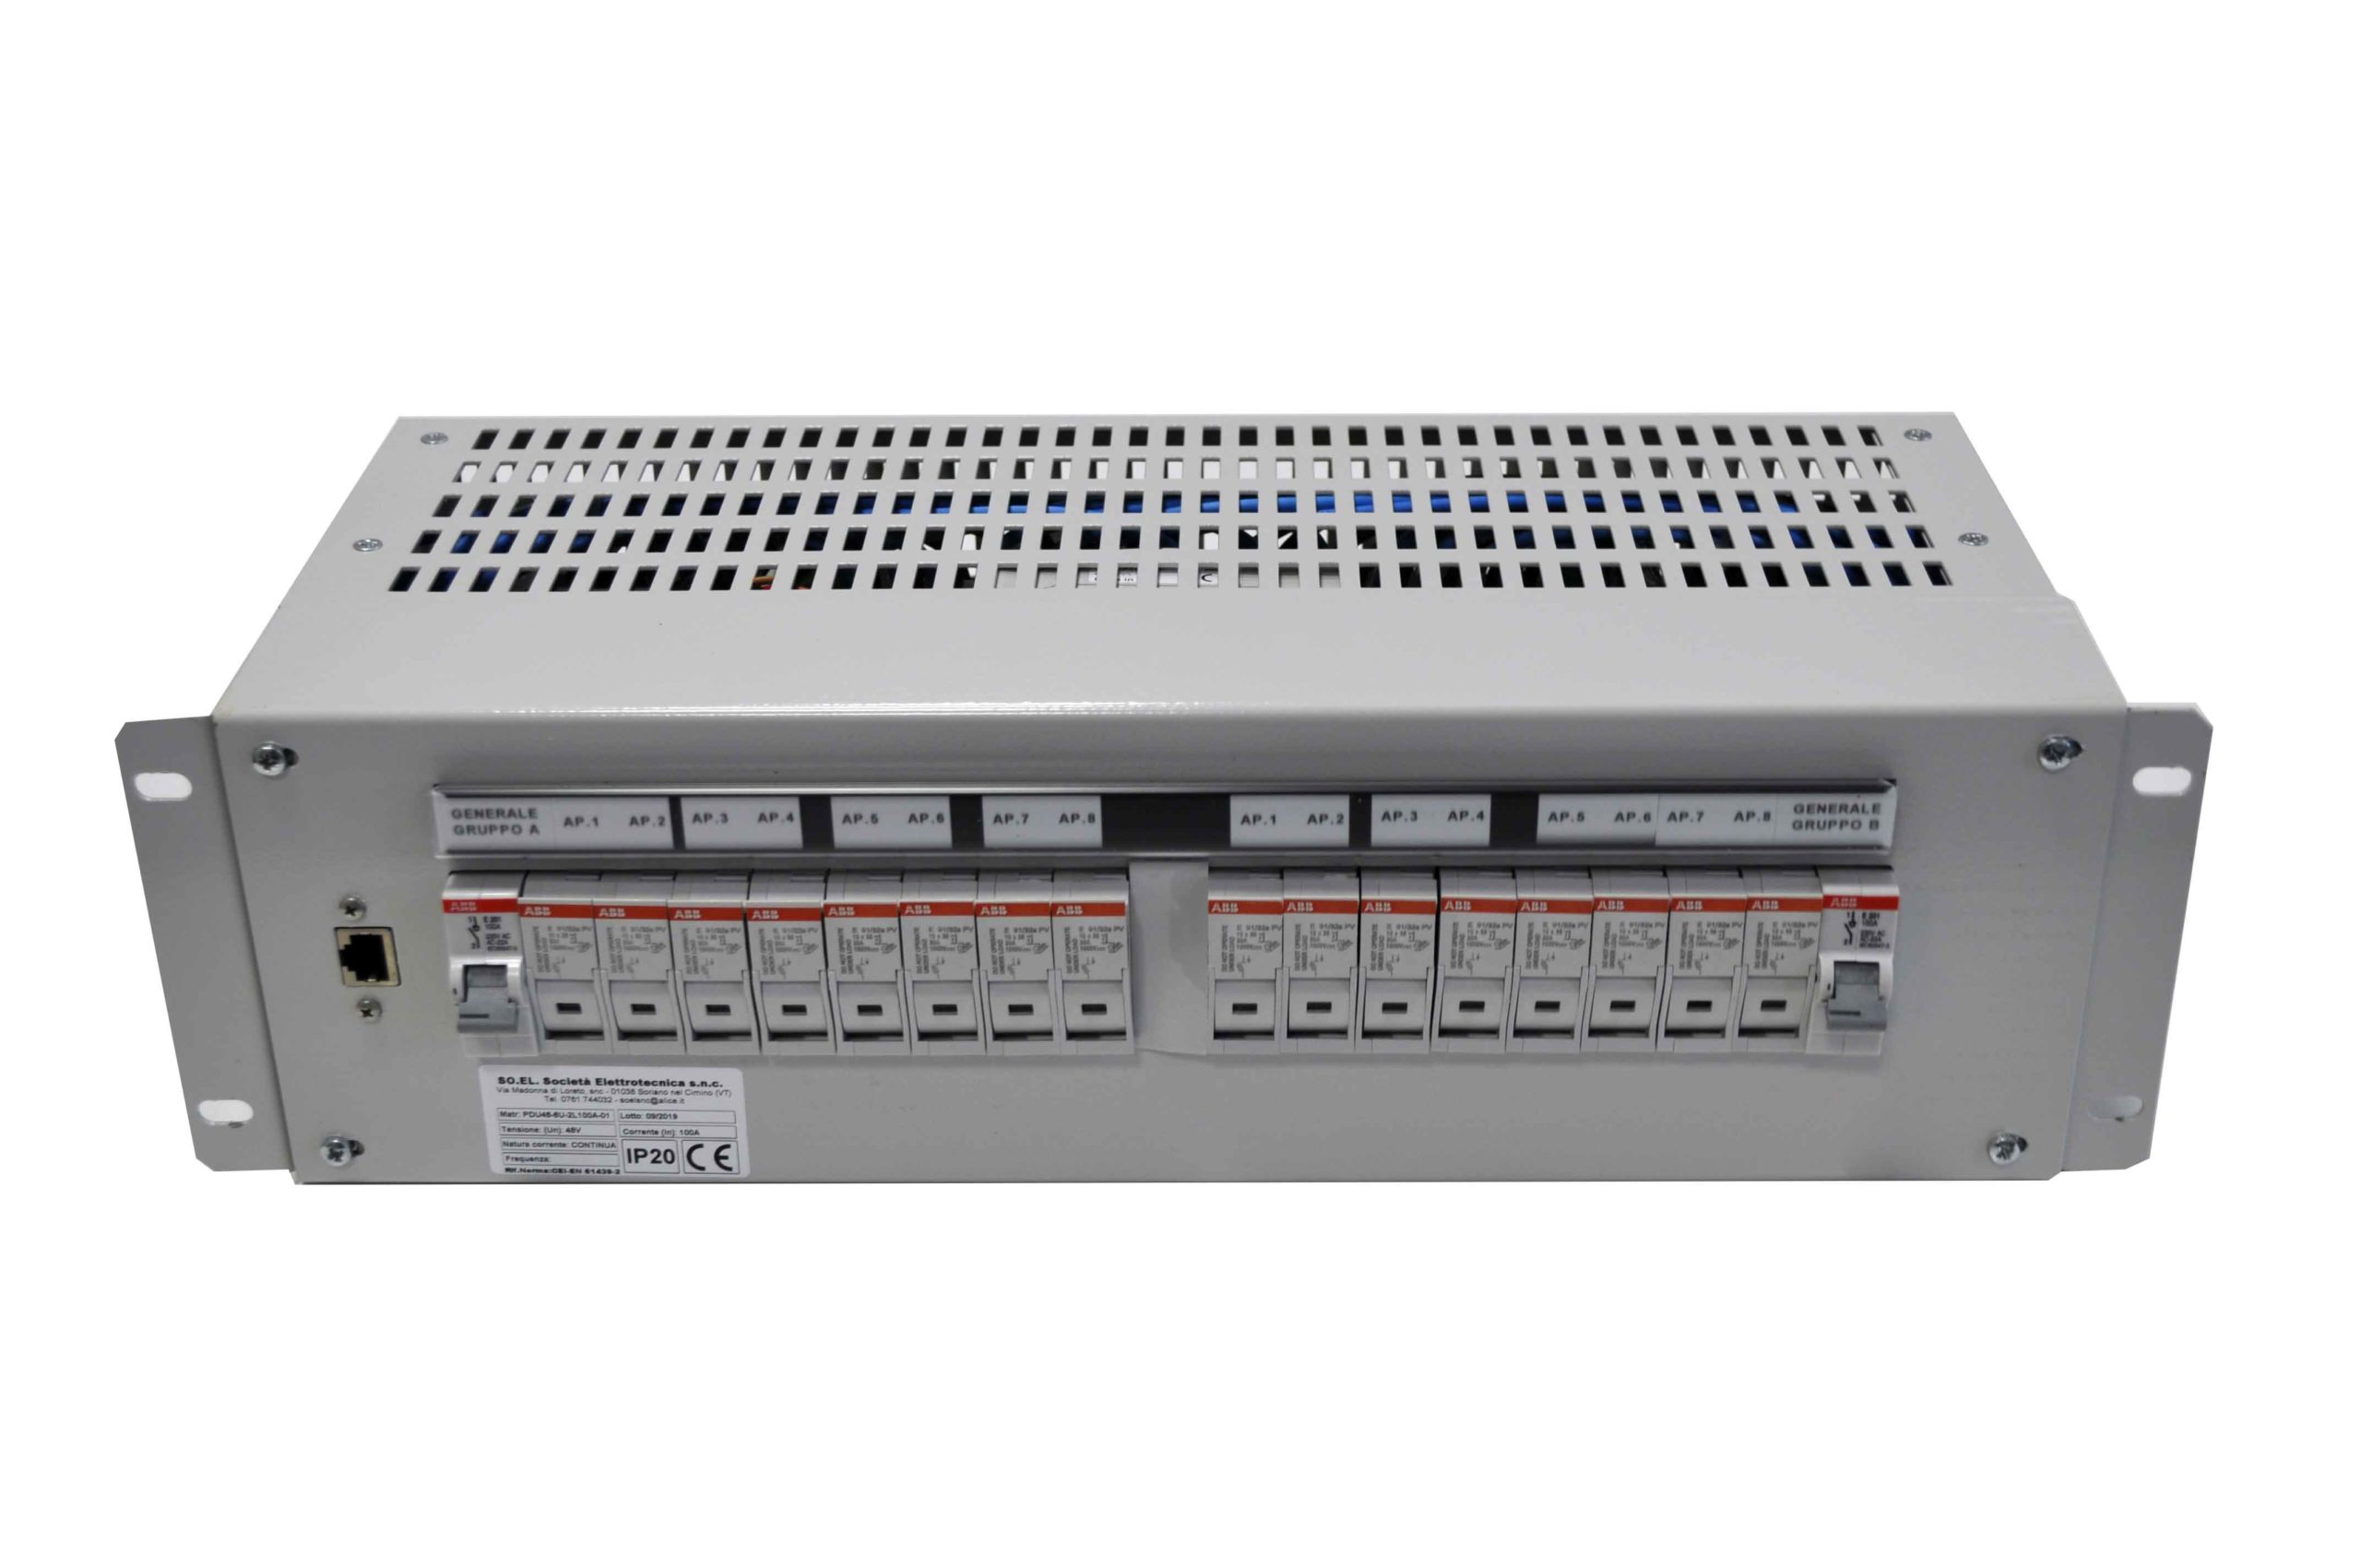  PDU 48Vcc 8+8 utenti monitoraggio correnti 3RU